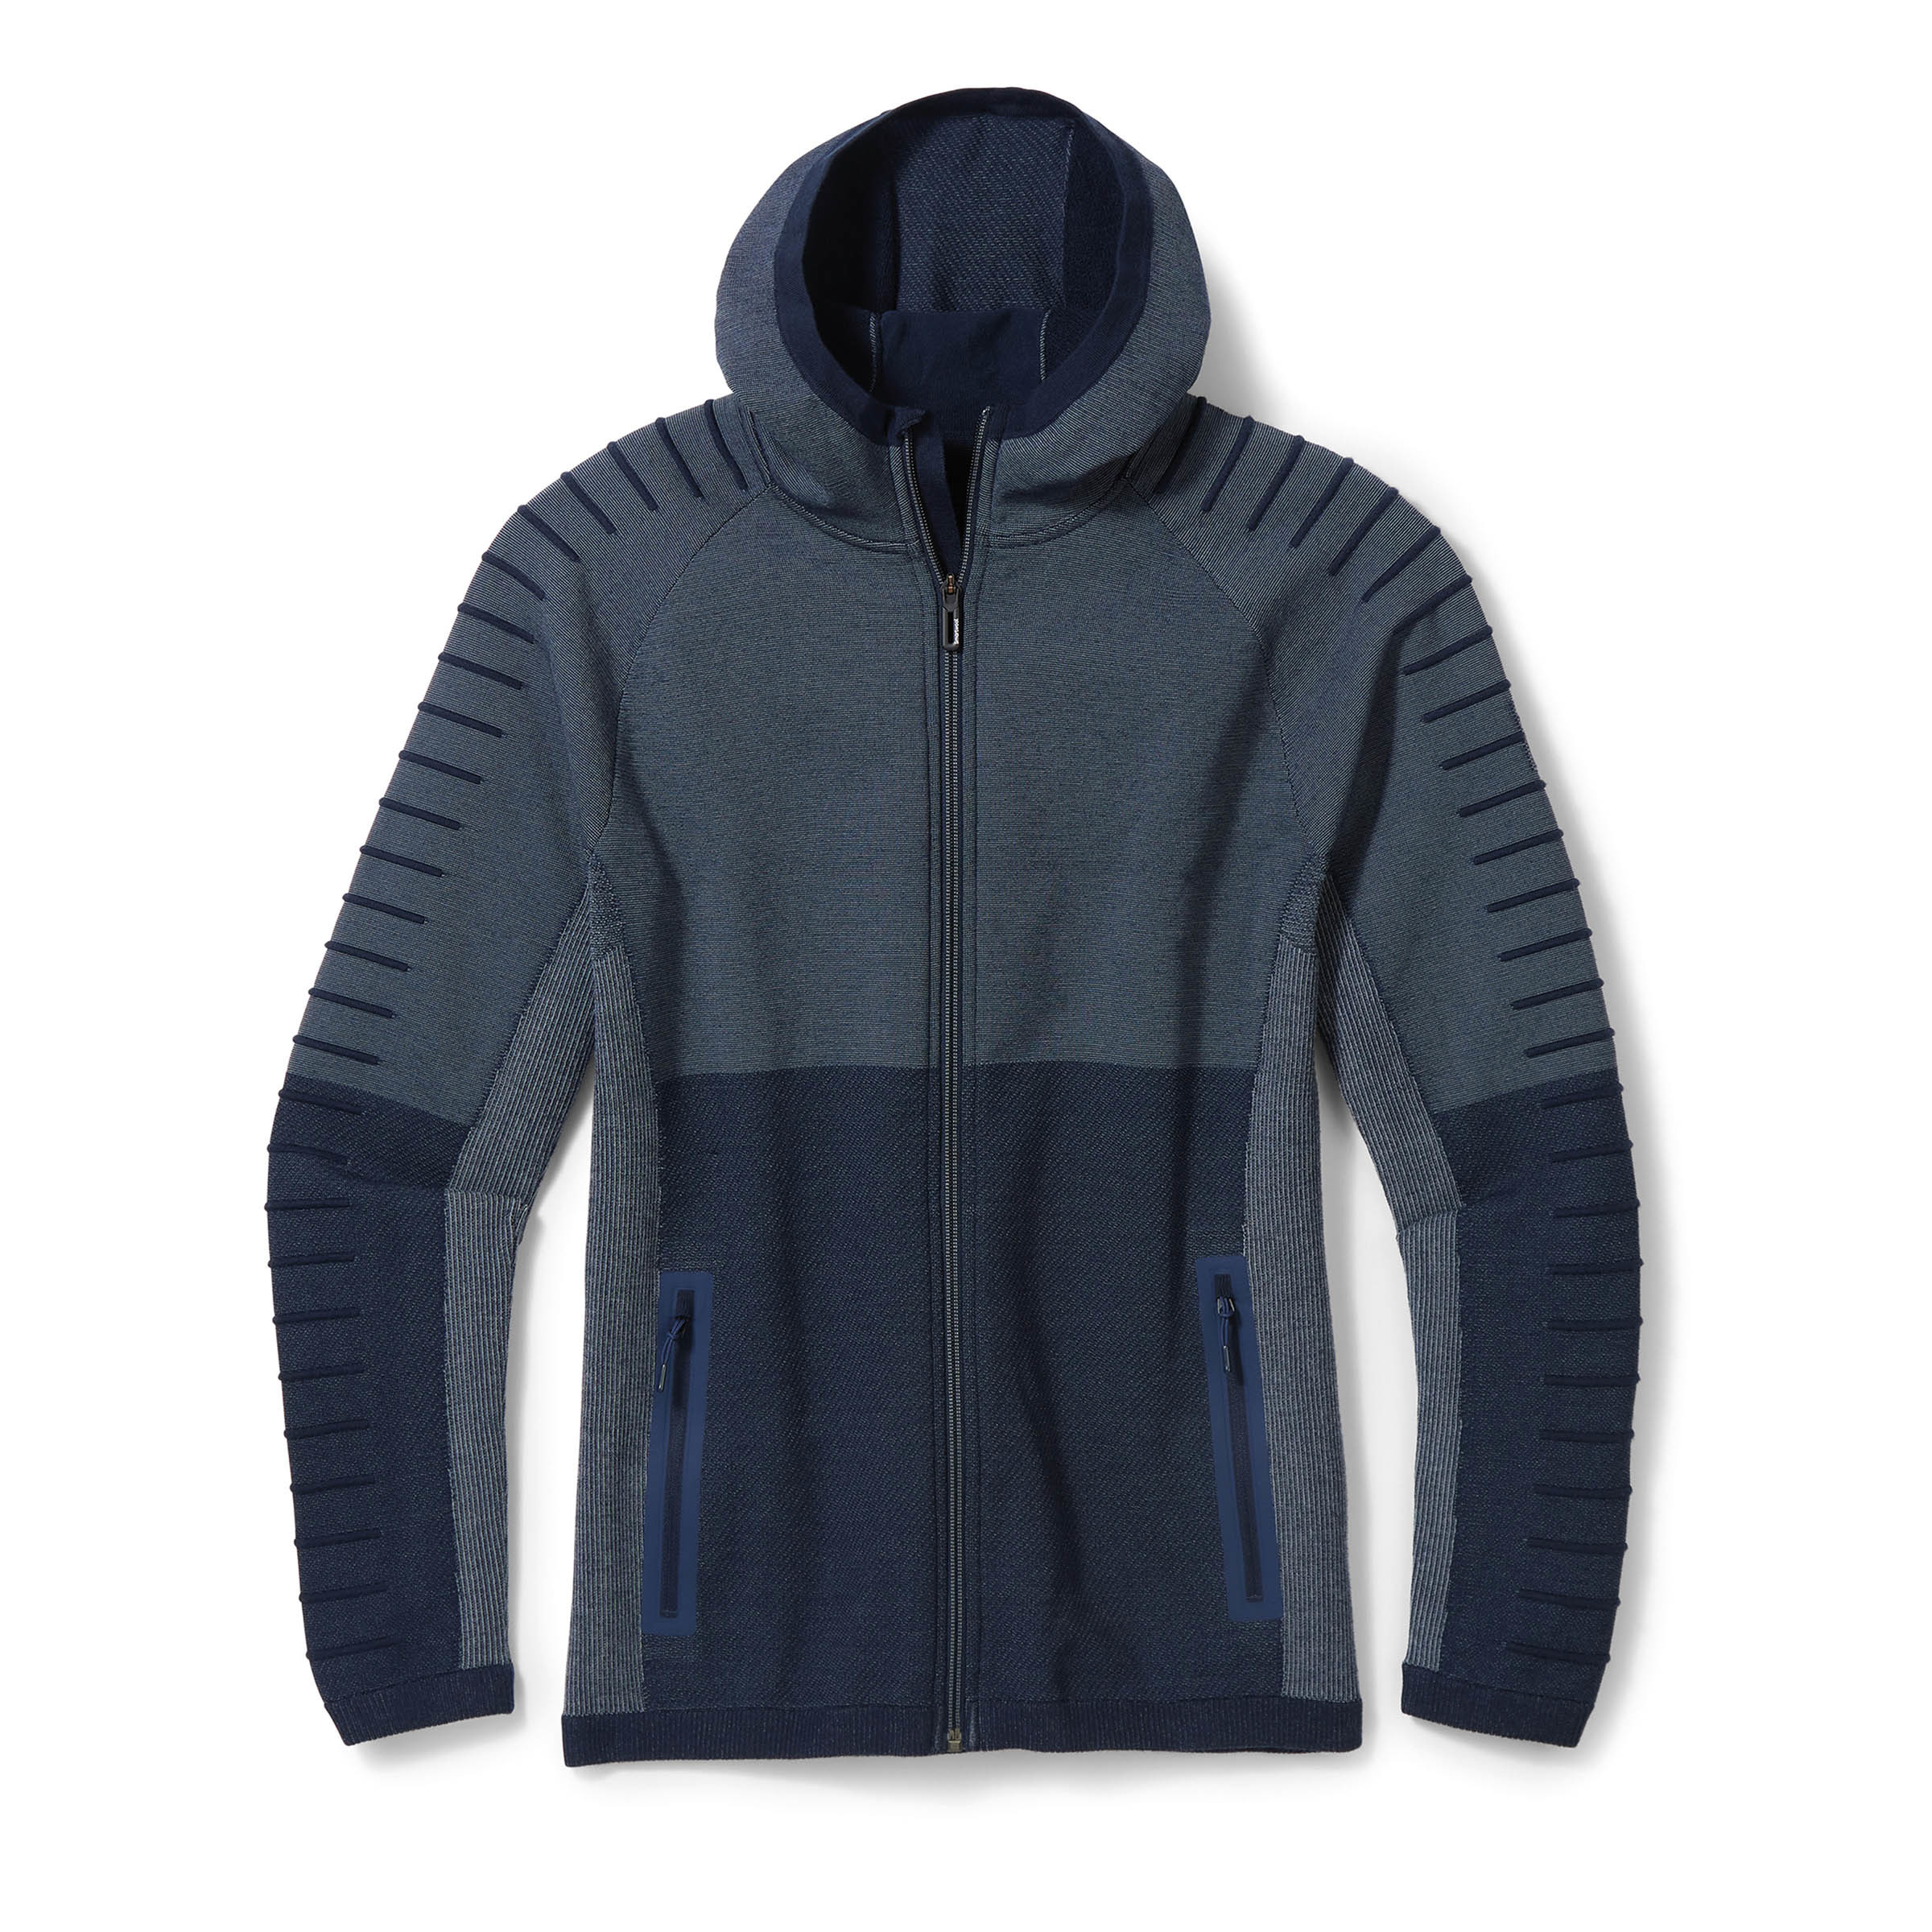 Alice Springs sweatshirt Grau S DAMEN Pullovers & Sweatshirts Ohne Kapuze Rabatt 99 % 